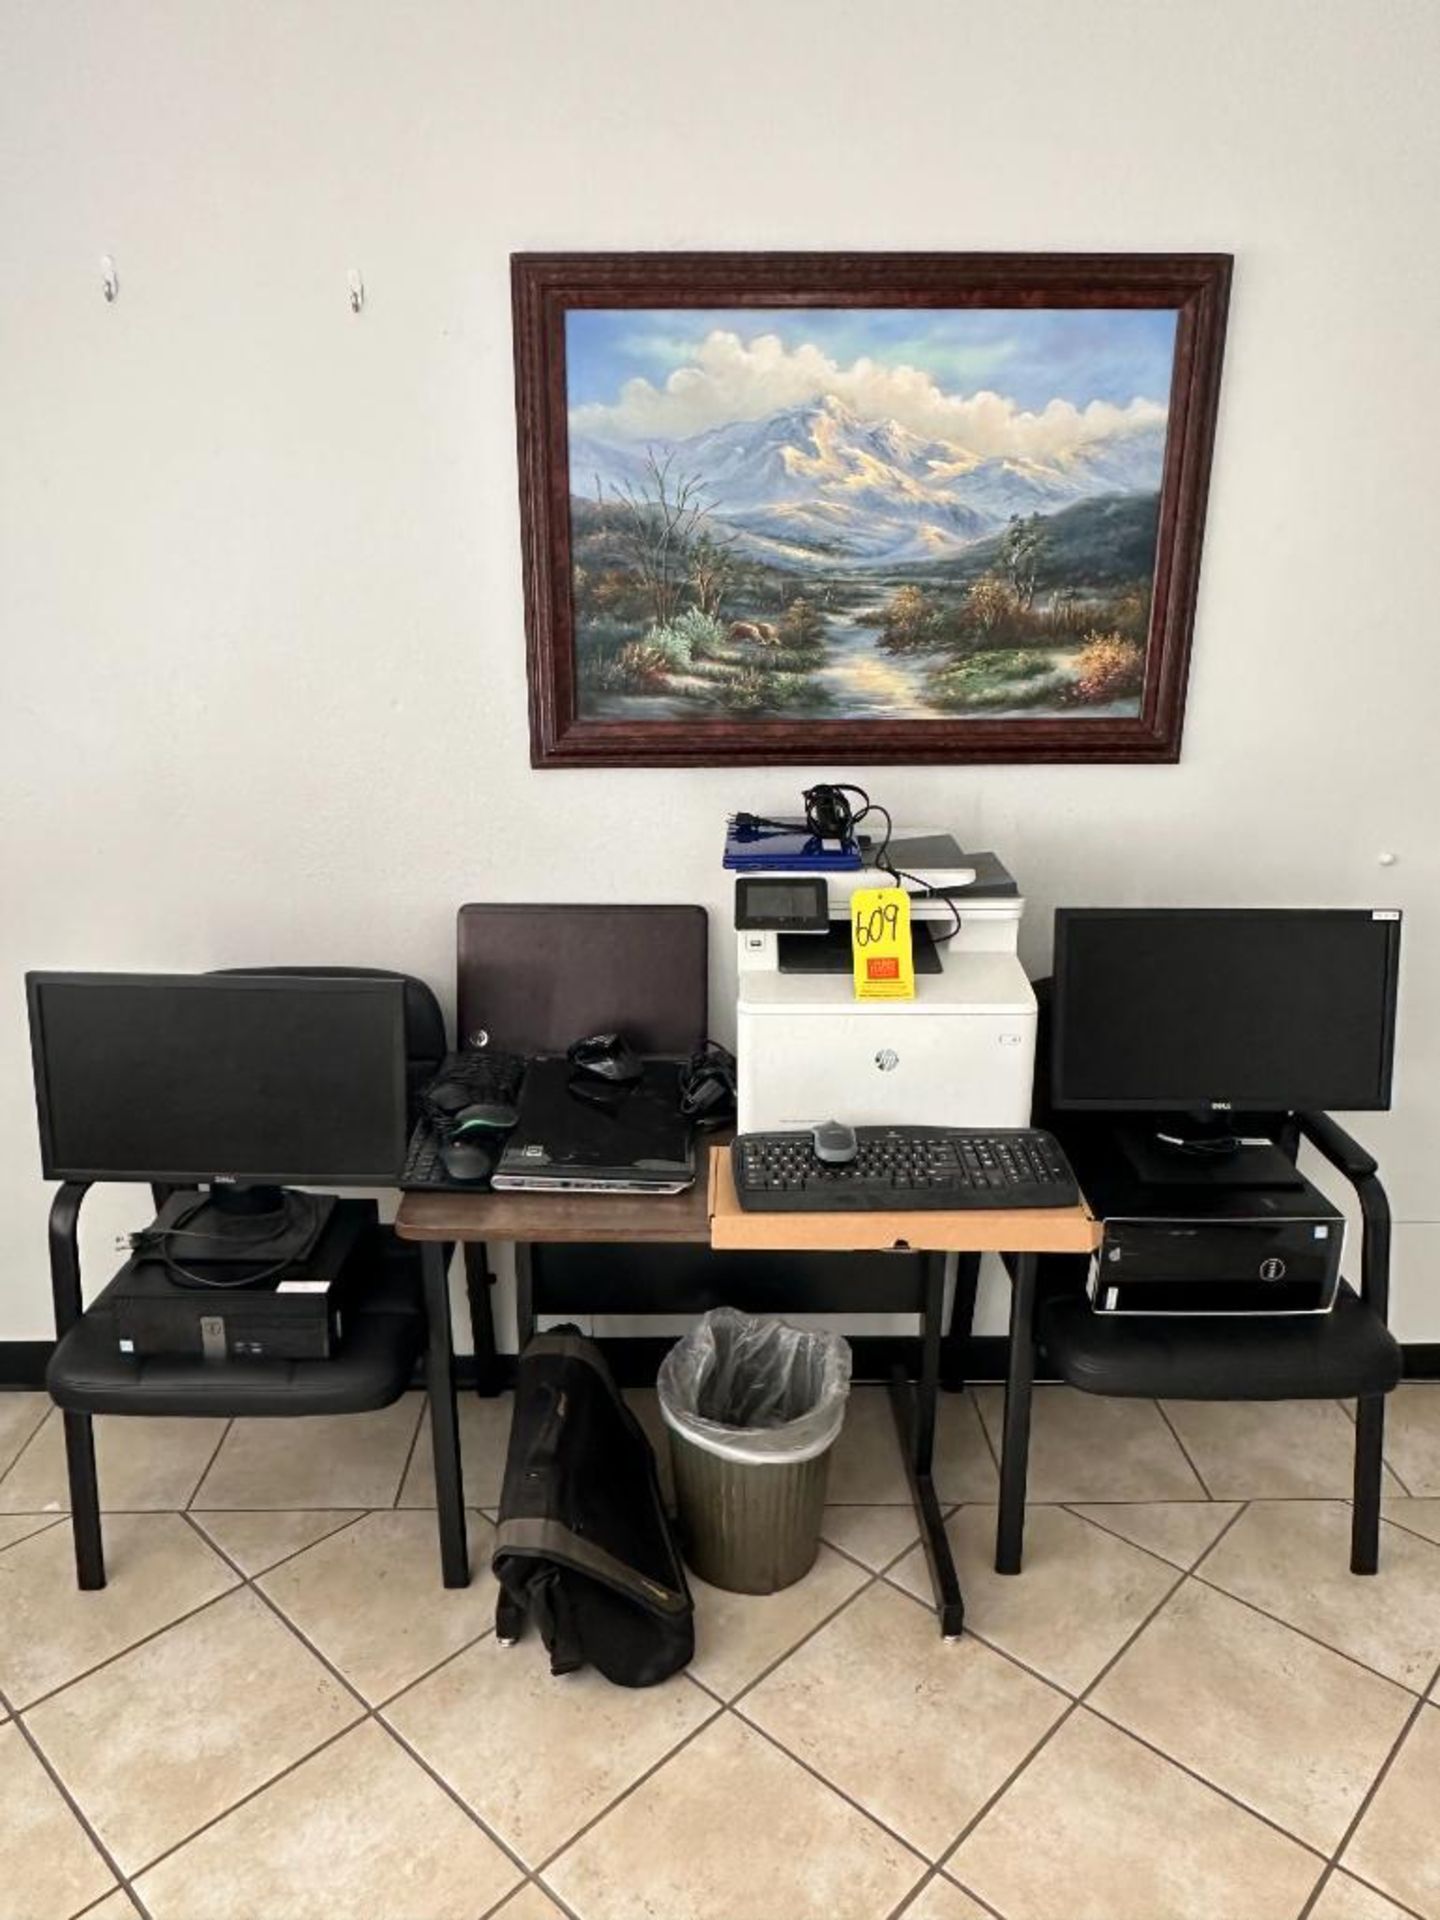 Desk, (2) Chairs, Printer, (3) Laptops, (2) Computer Monitors, (2) Desktop Computers, Computer Bag,